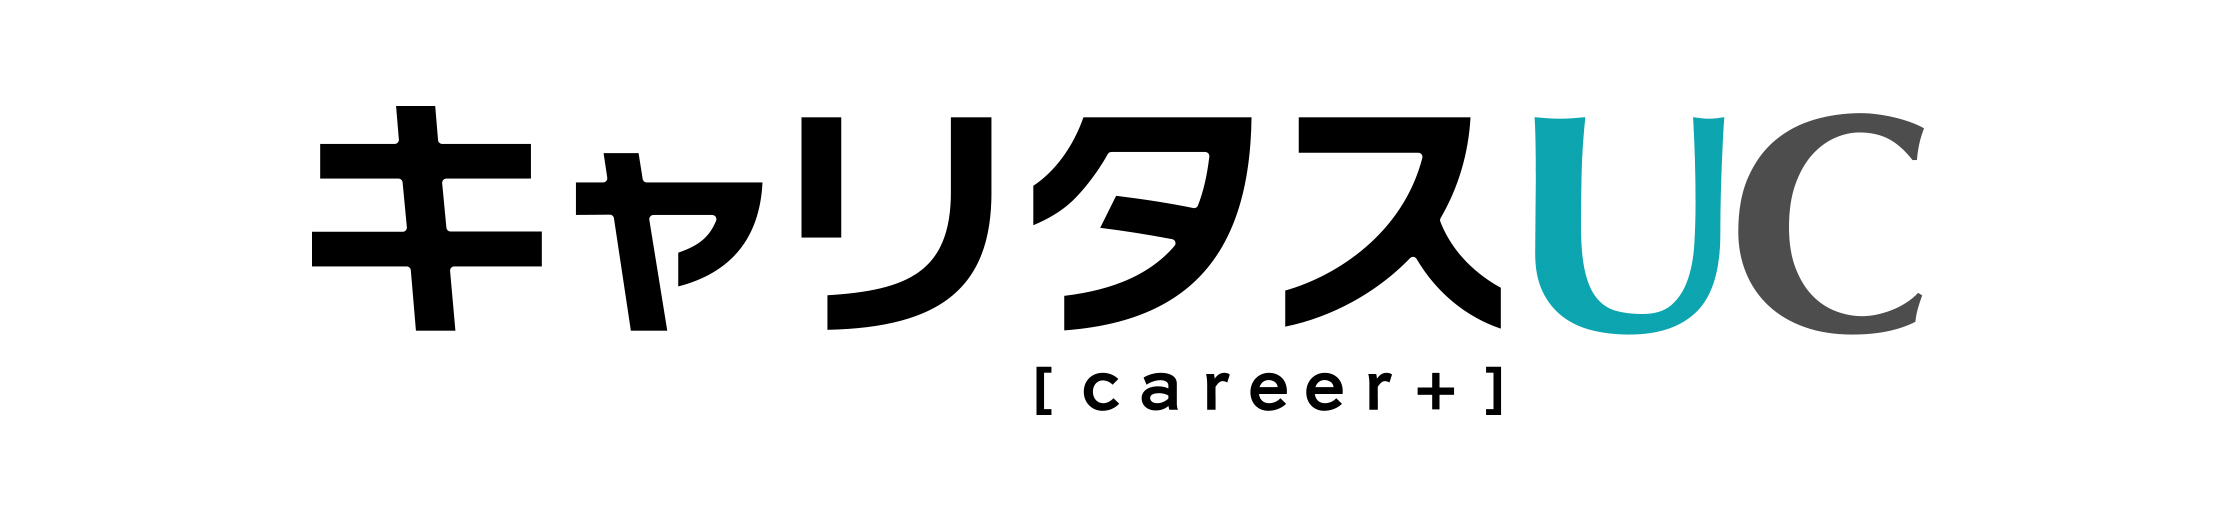 RGB_UC_logo